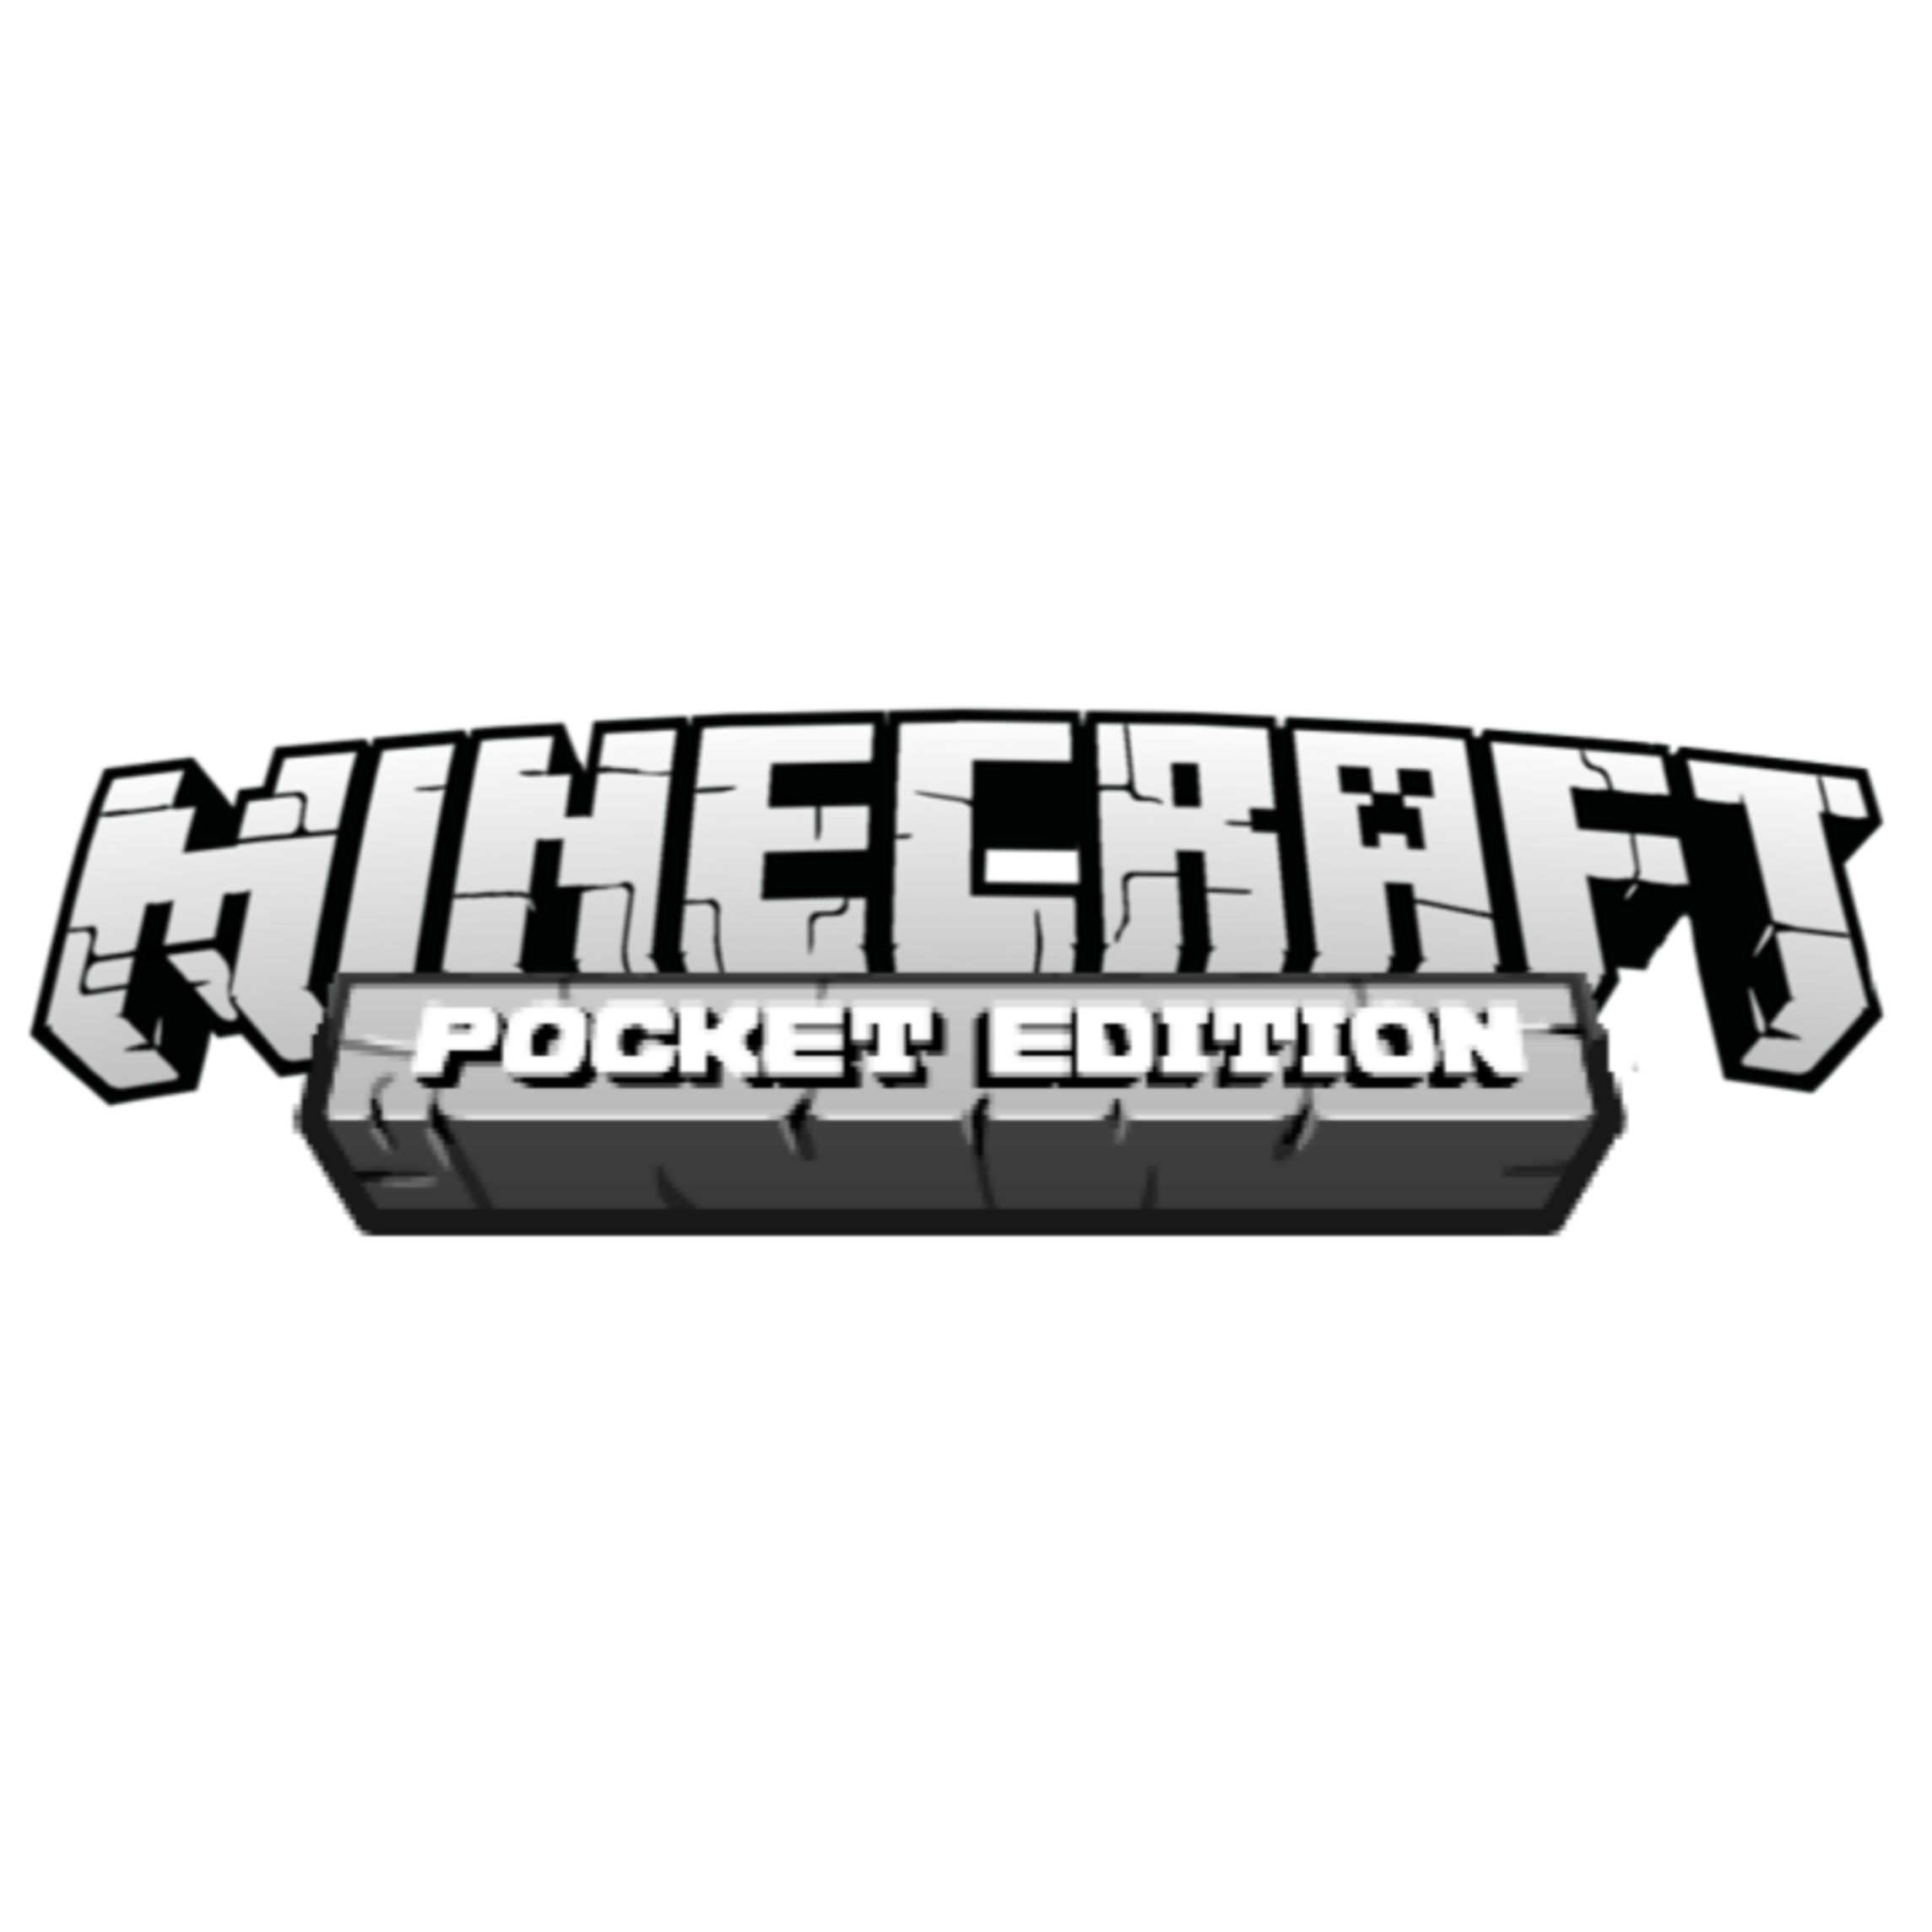 Minecraft logo png. Майнкрафт надпись. Майнкрафт логотип PNG. Значок МАЙНКРАФТА Pocket Edition. Майнкрафт логотип надпись.